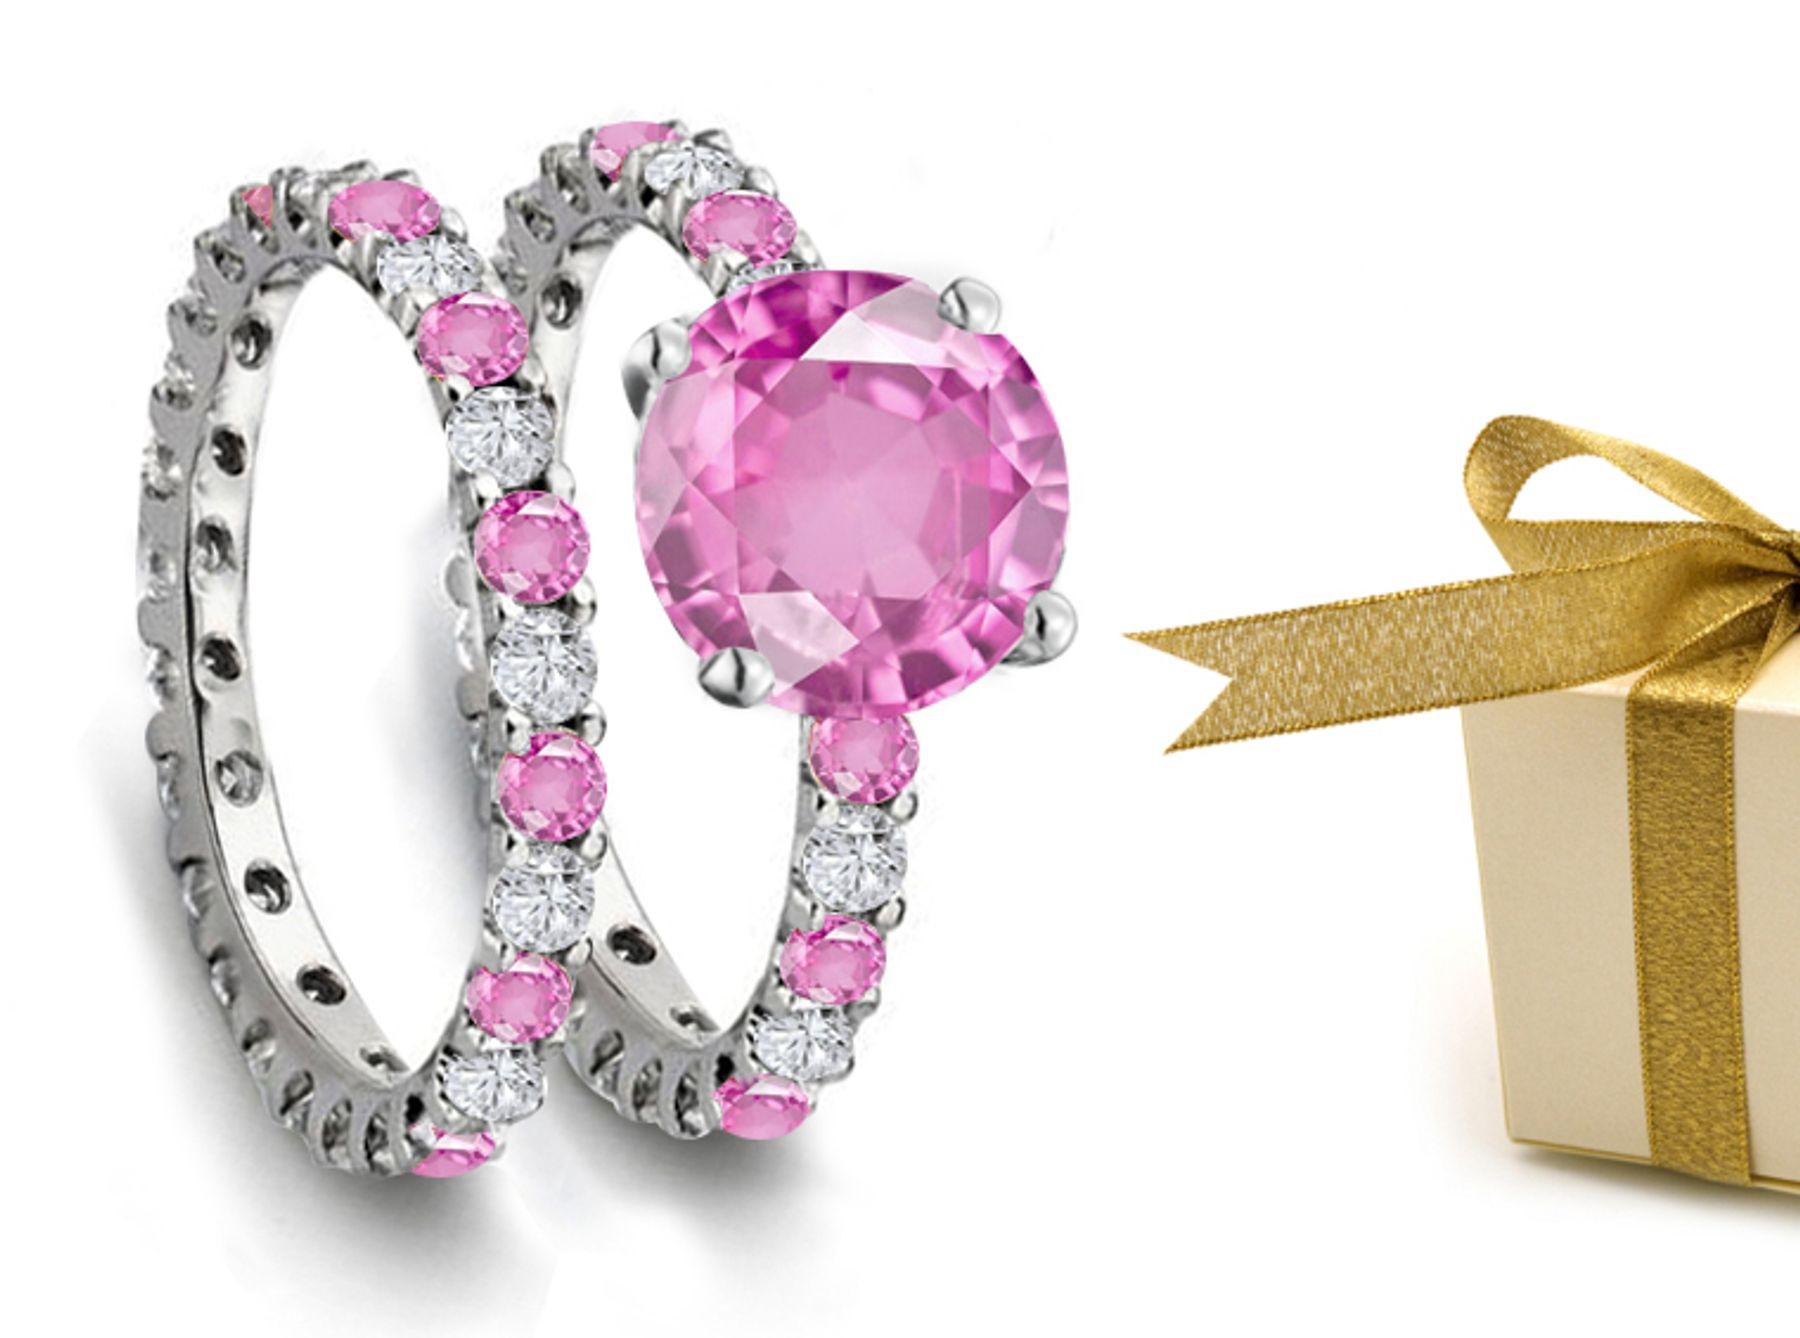 Flight To Fame: Prong Set Pink Celestial Sapphire & White Diamond Engagement & Wedding Rings Gold